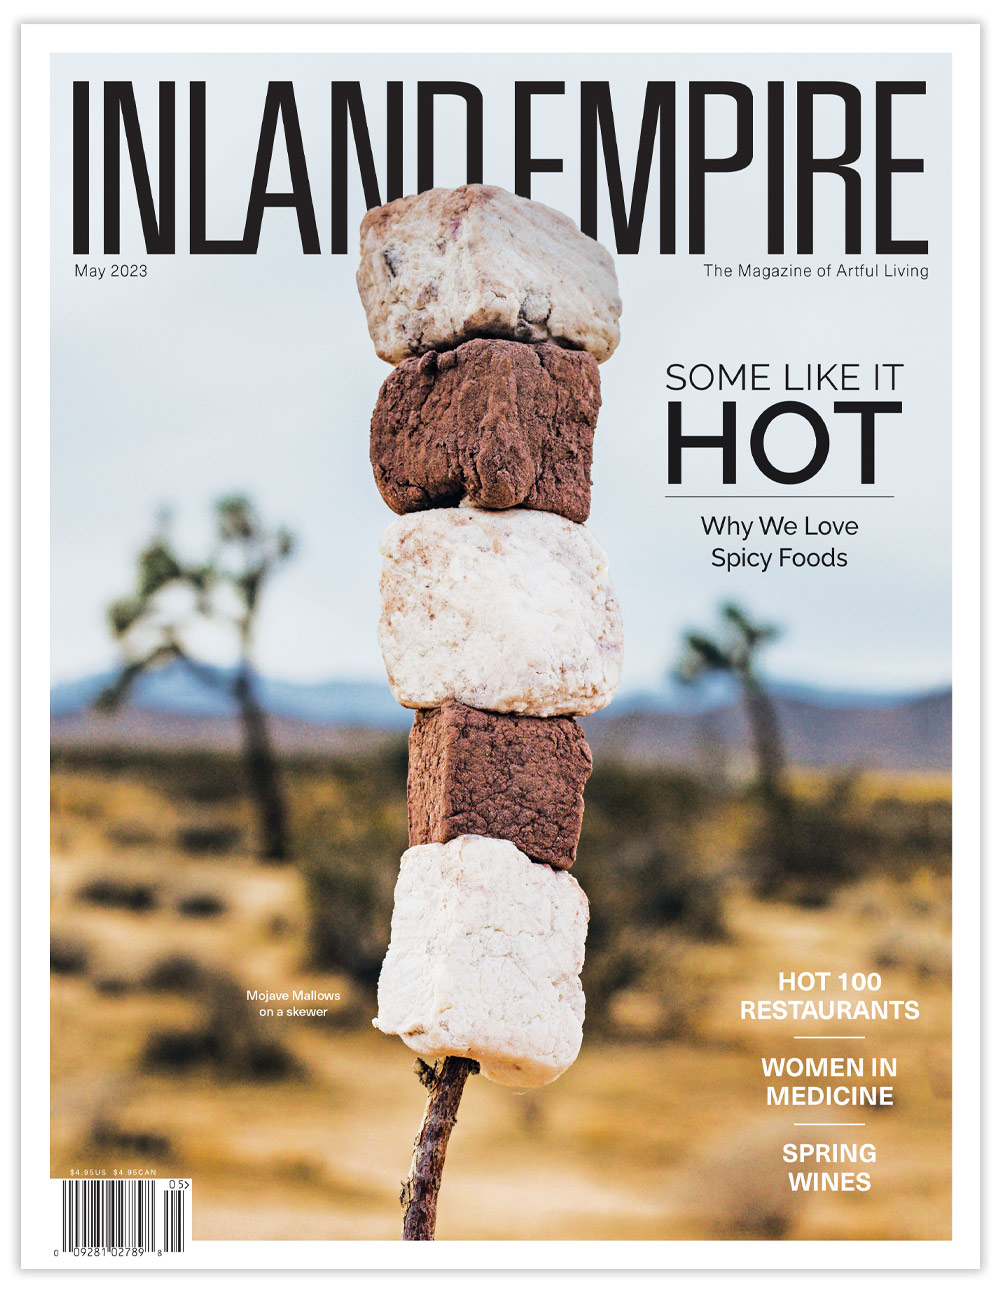 Inland Empire Magazine January 2023